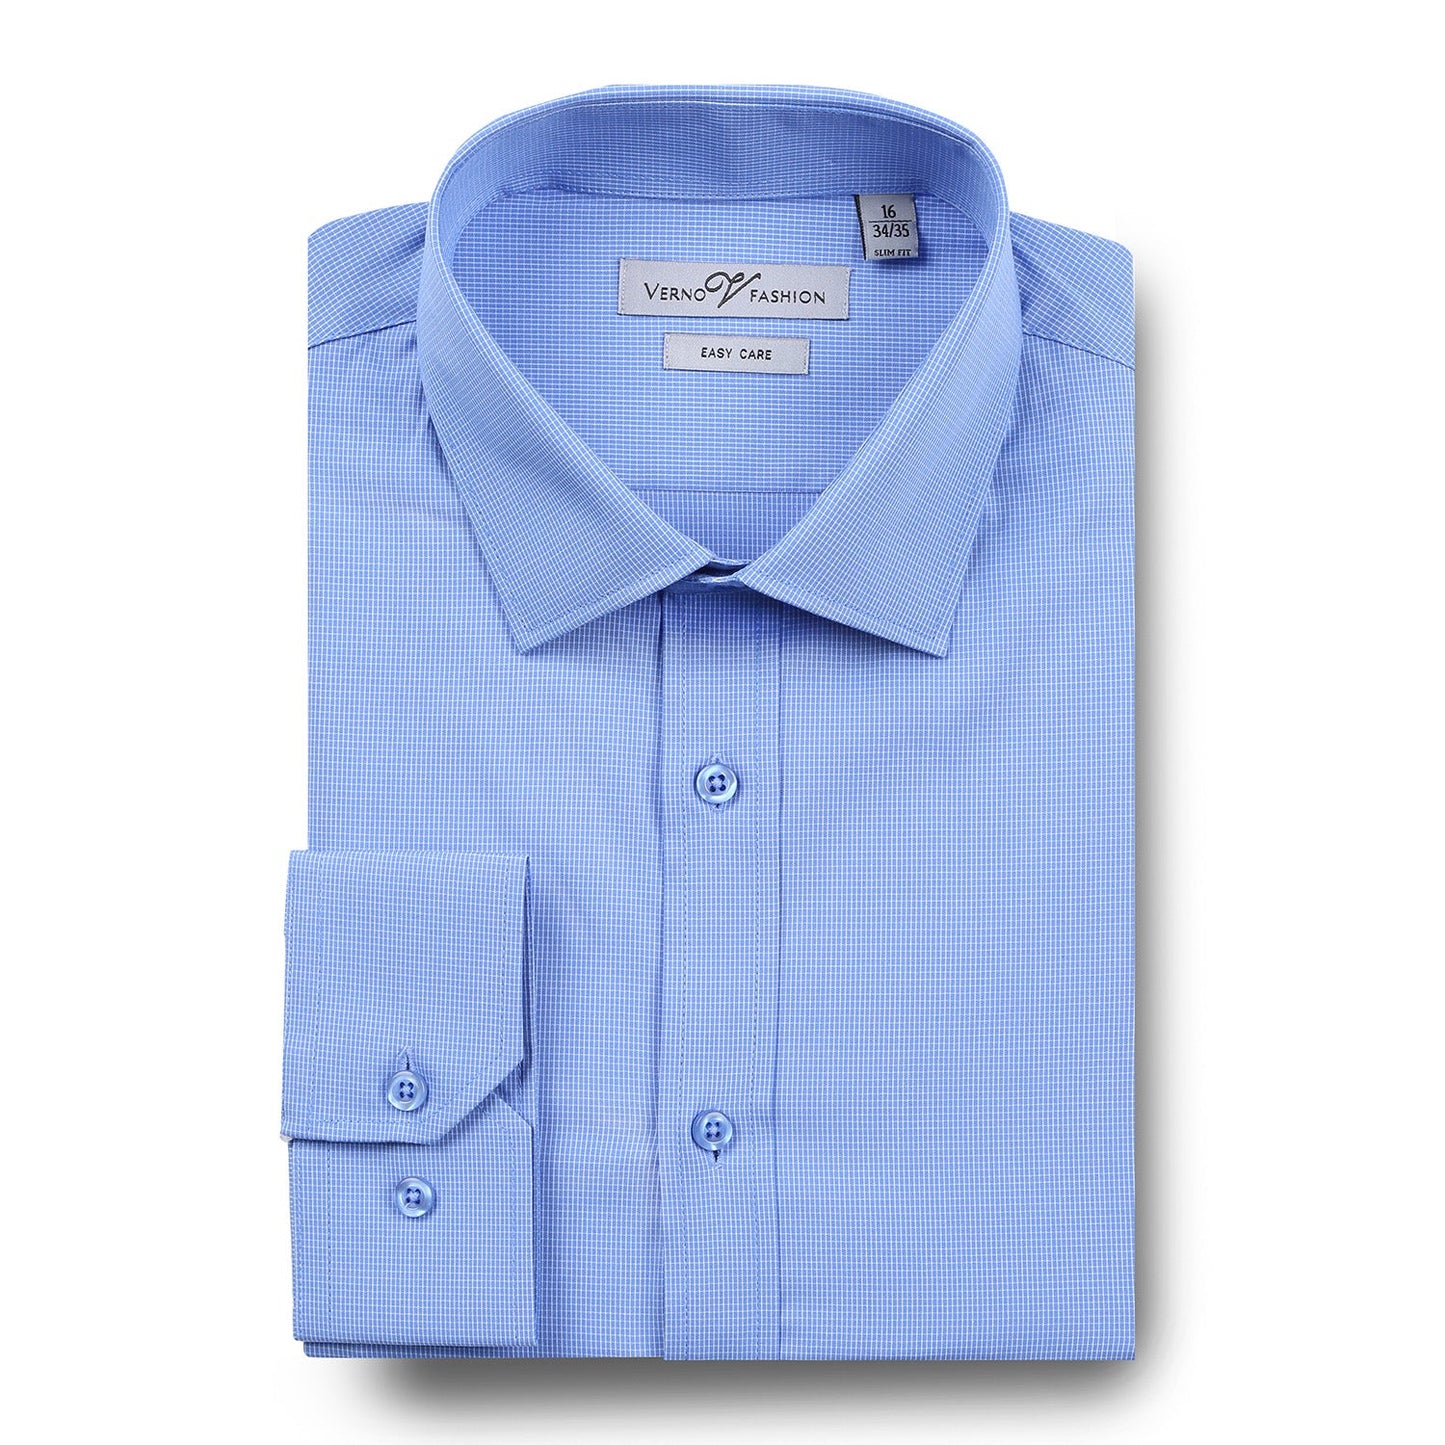 SS211 Men's Slim Fit Cotton Easy Care Blue Check Dress Shirt